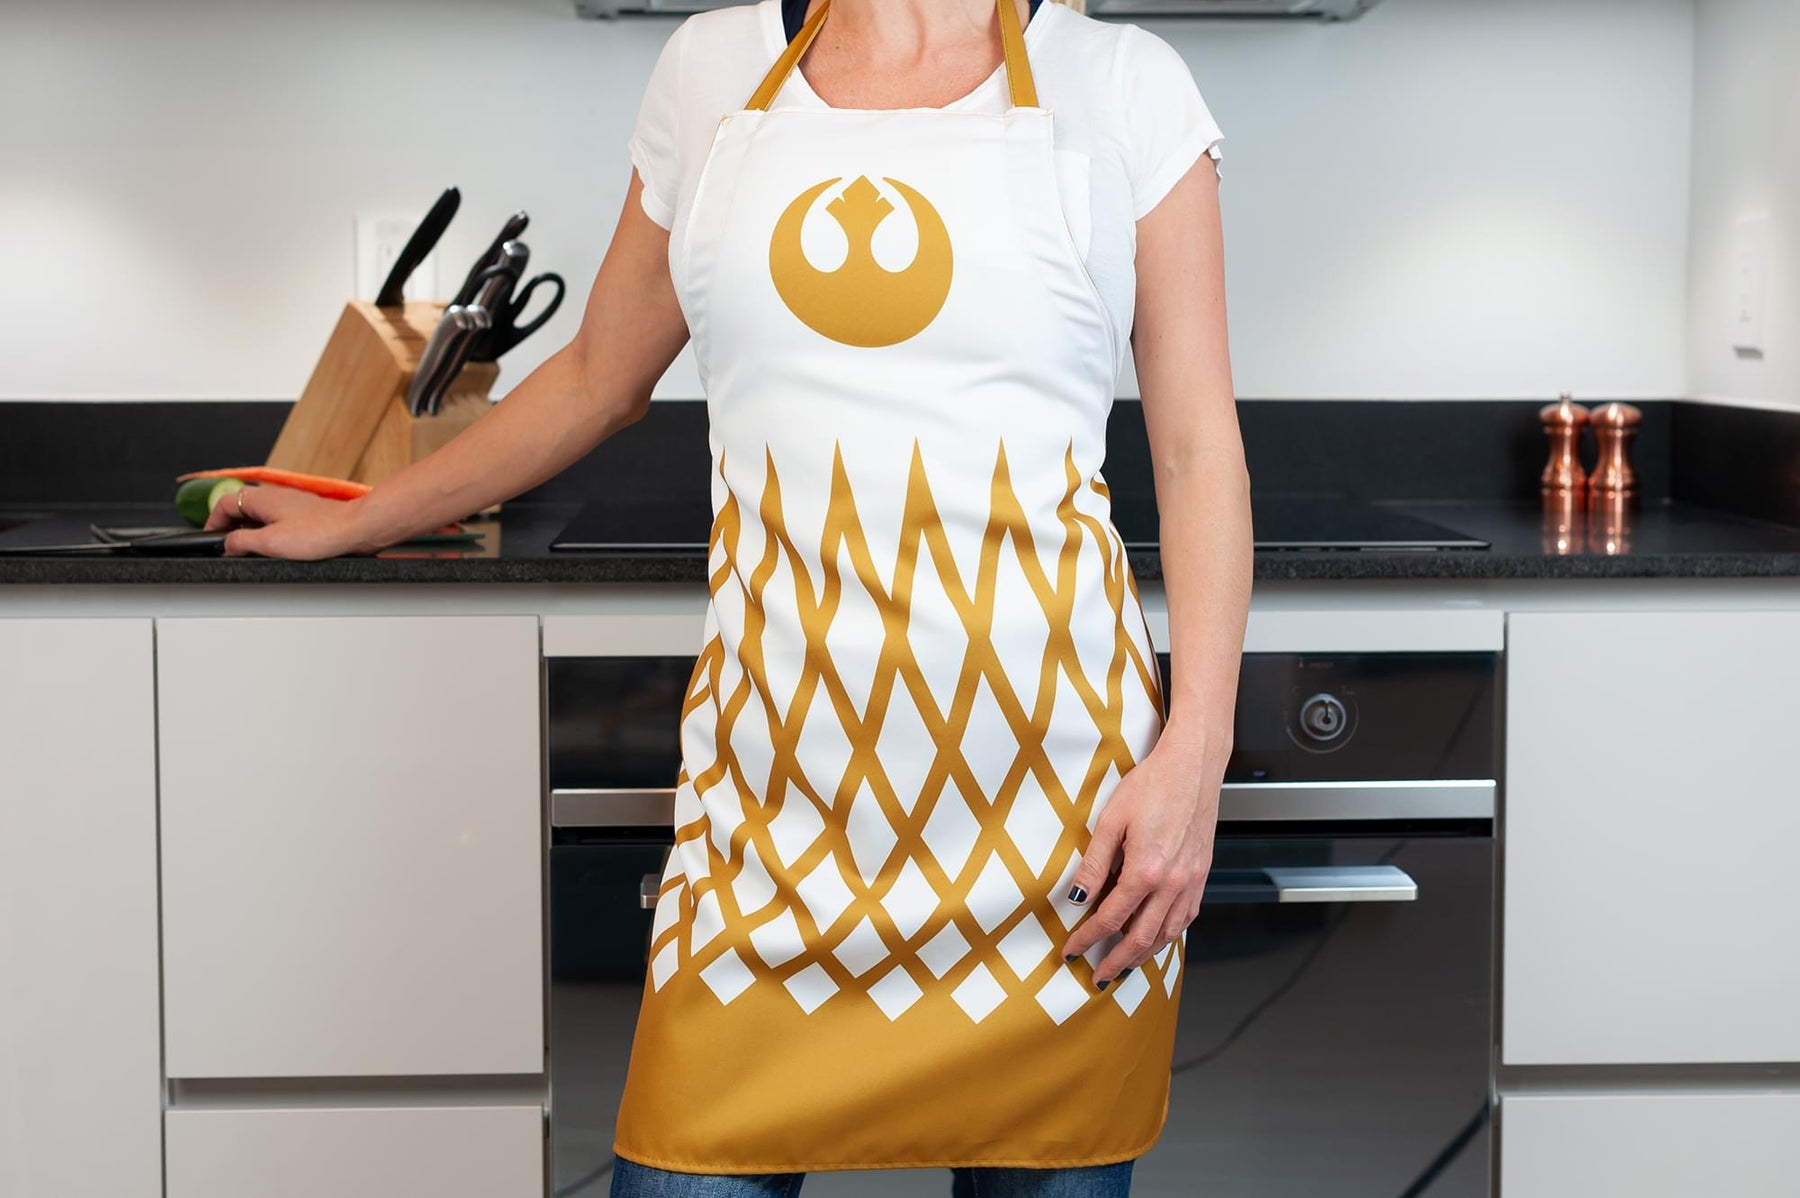 Star Wars White/Gold Adult Apron & Oven Mitt Set - Rebel Design